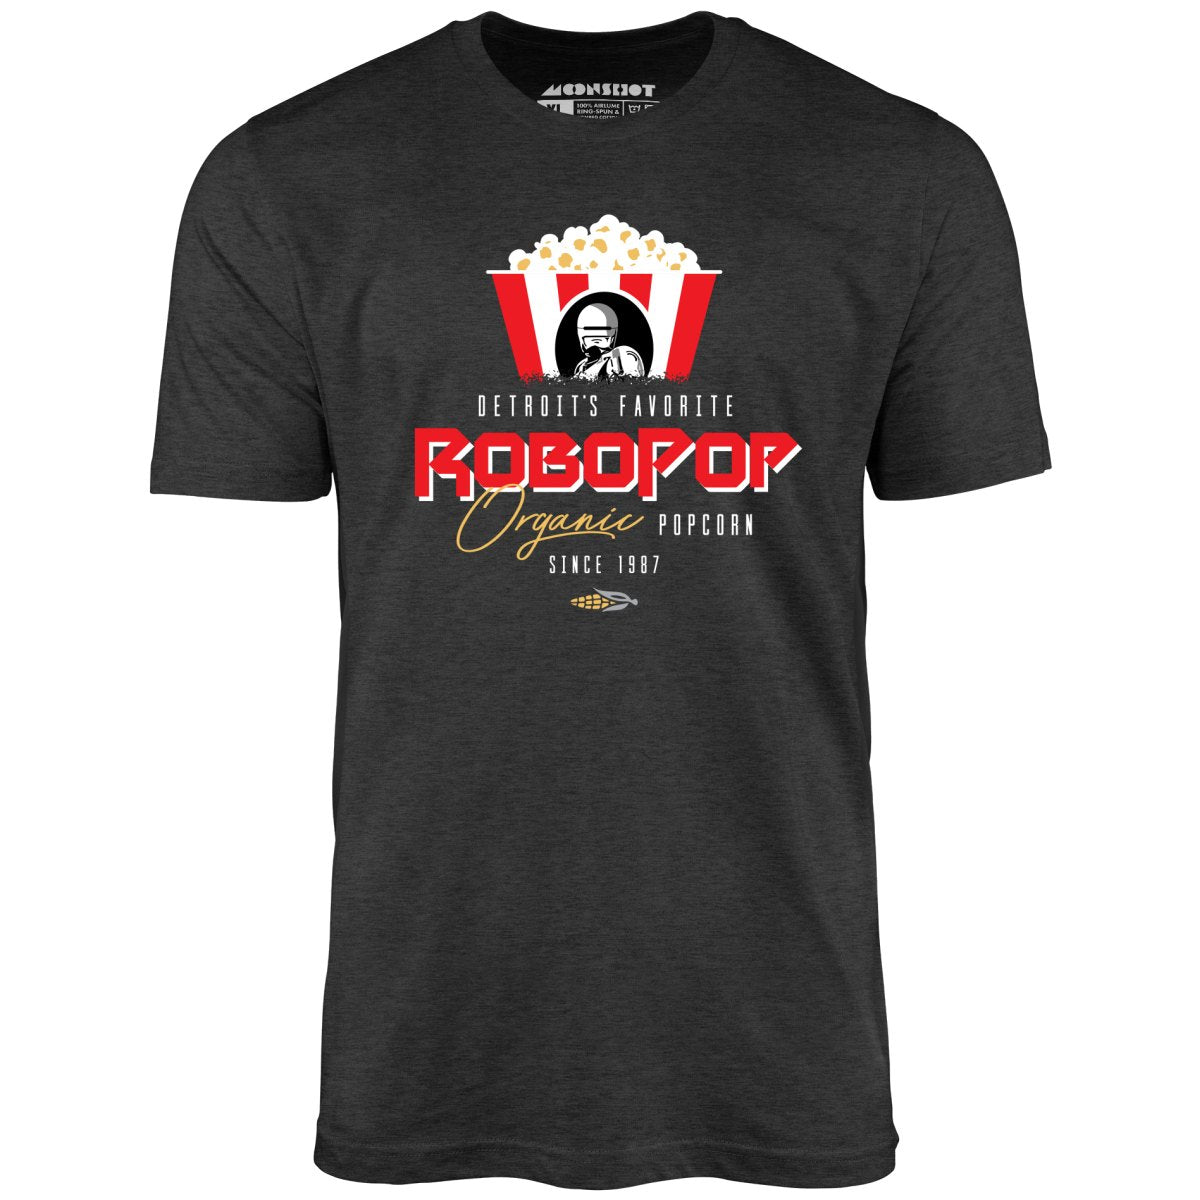 Robopop Organic Popcorn - Unisex T-Shirt